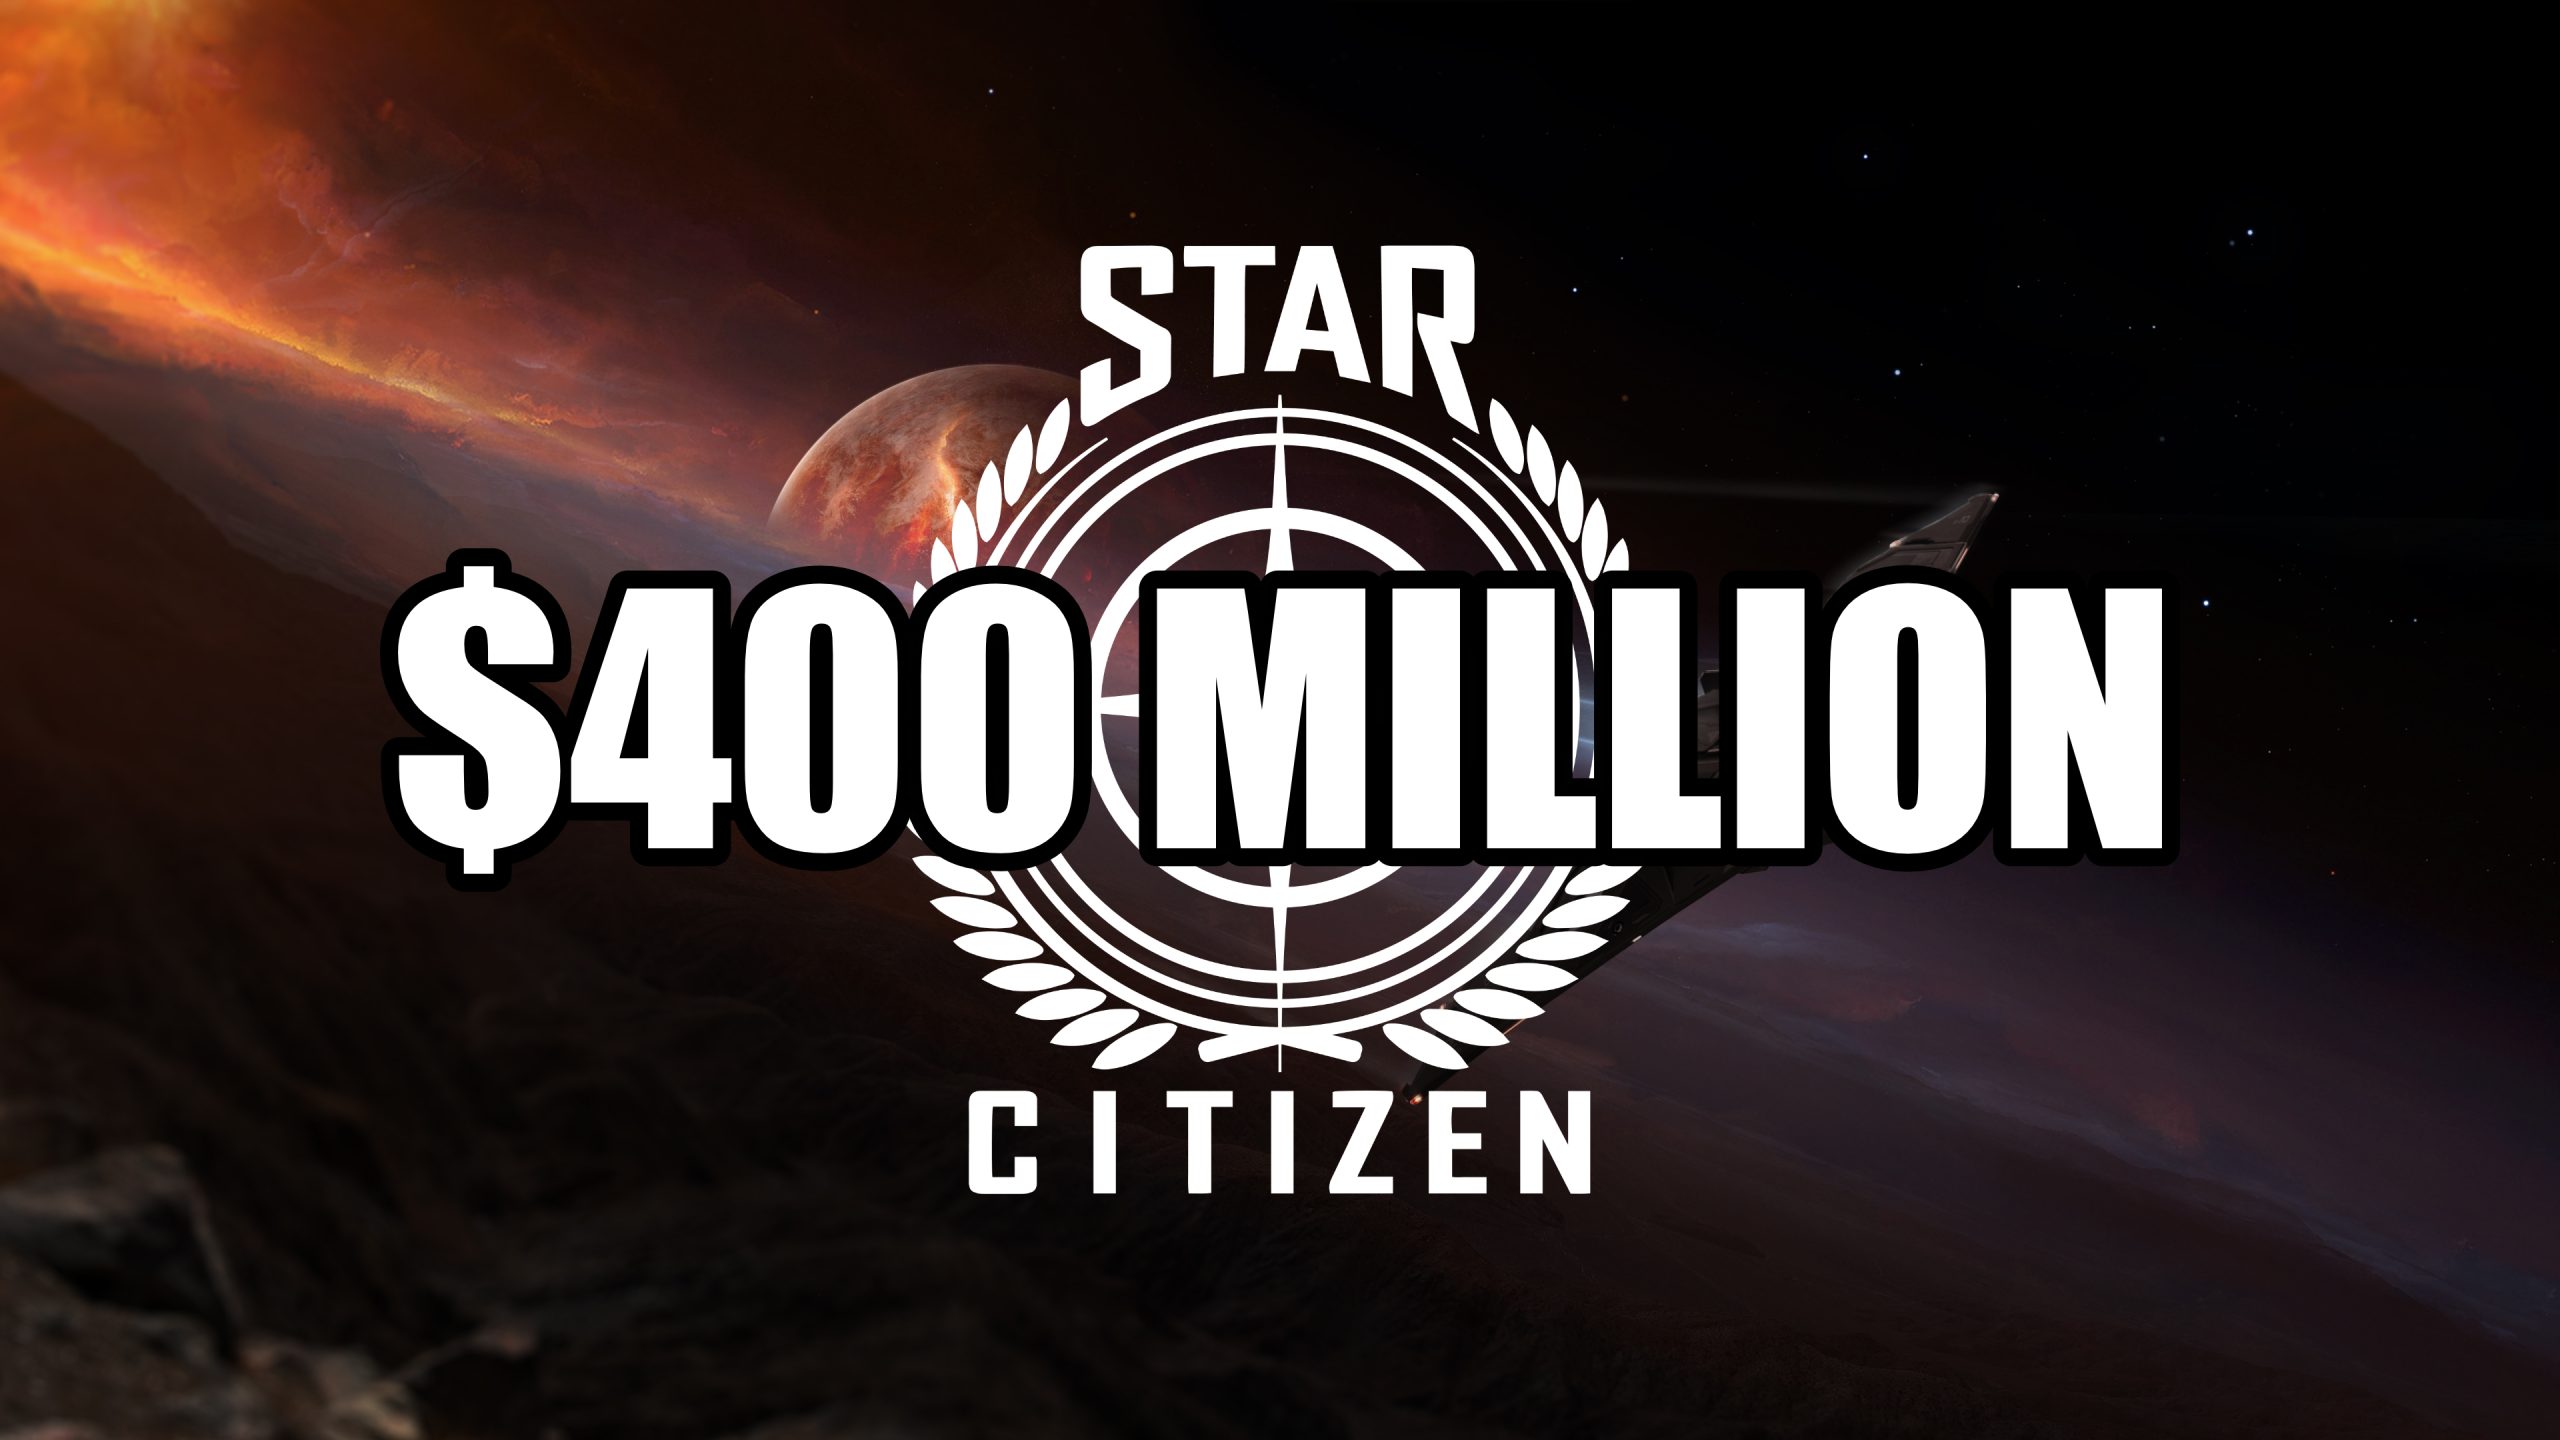 star citizen funding